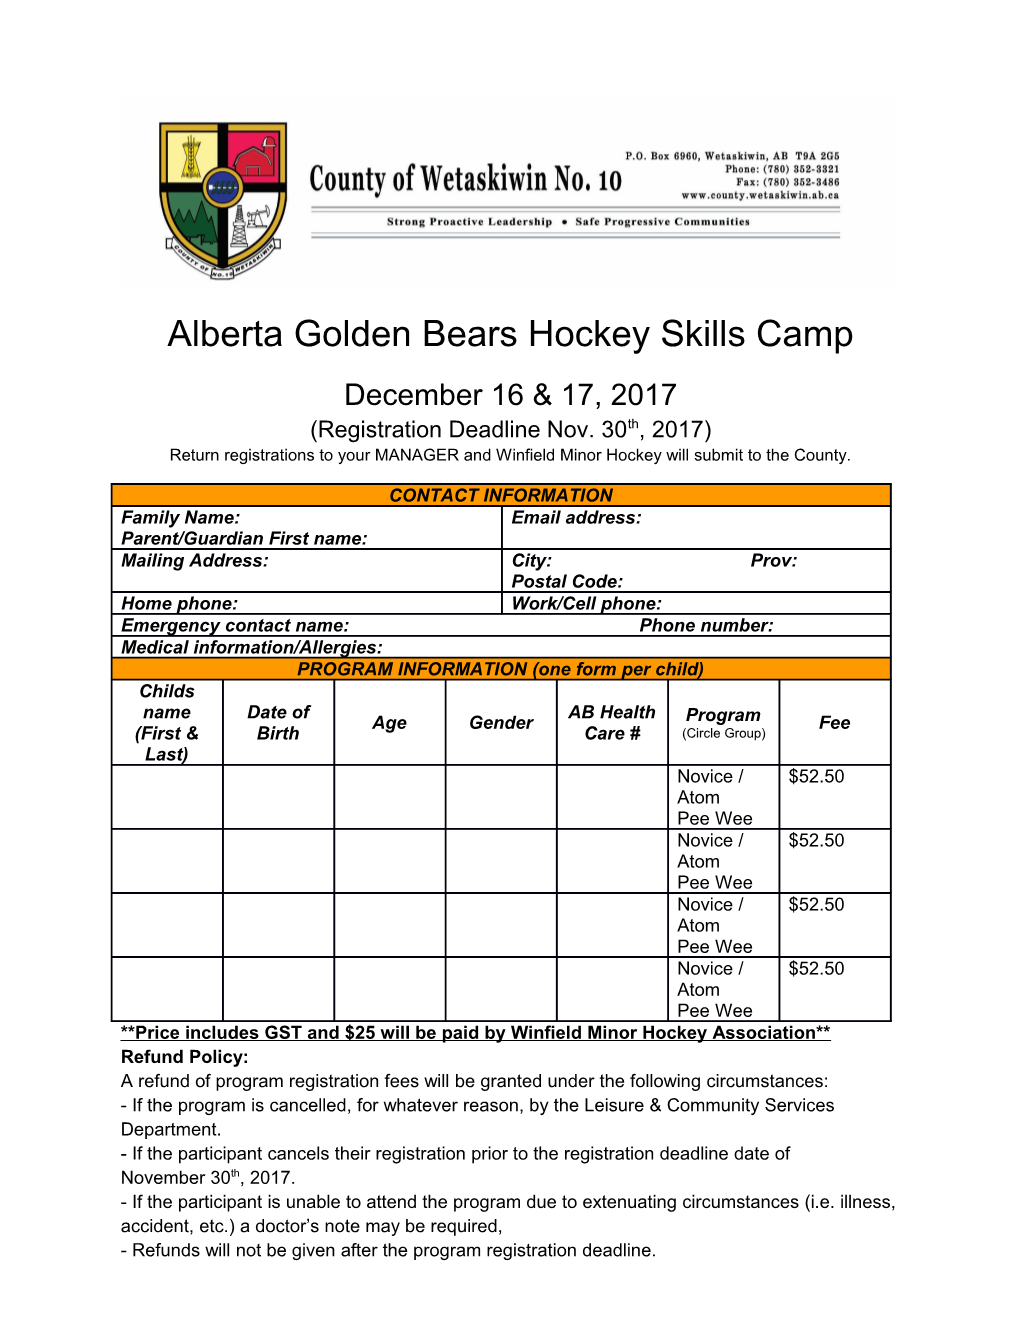 Alberta Golden Bears Hockey Skills Camp